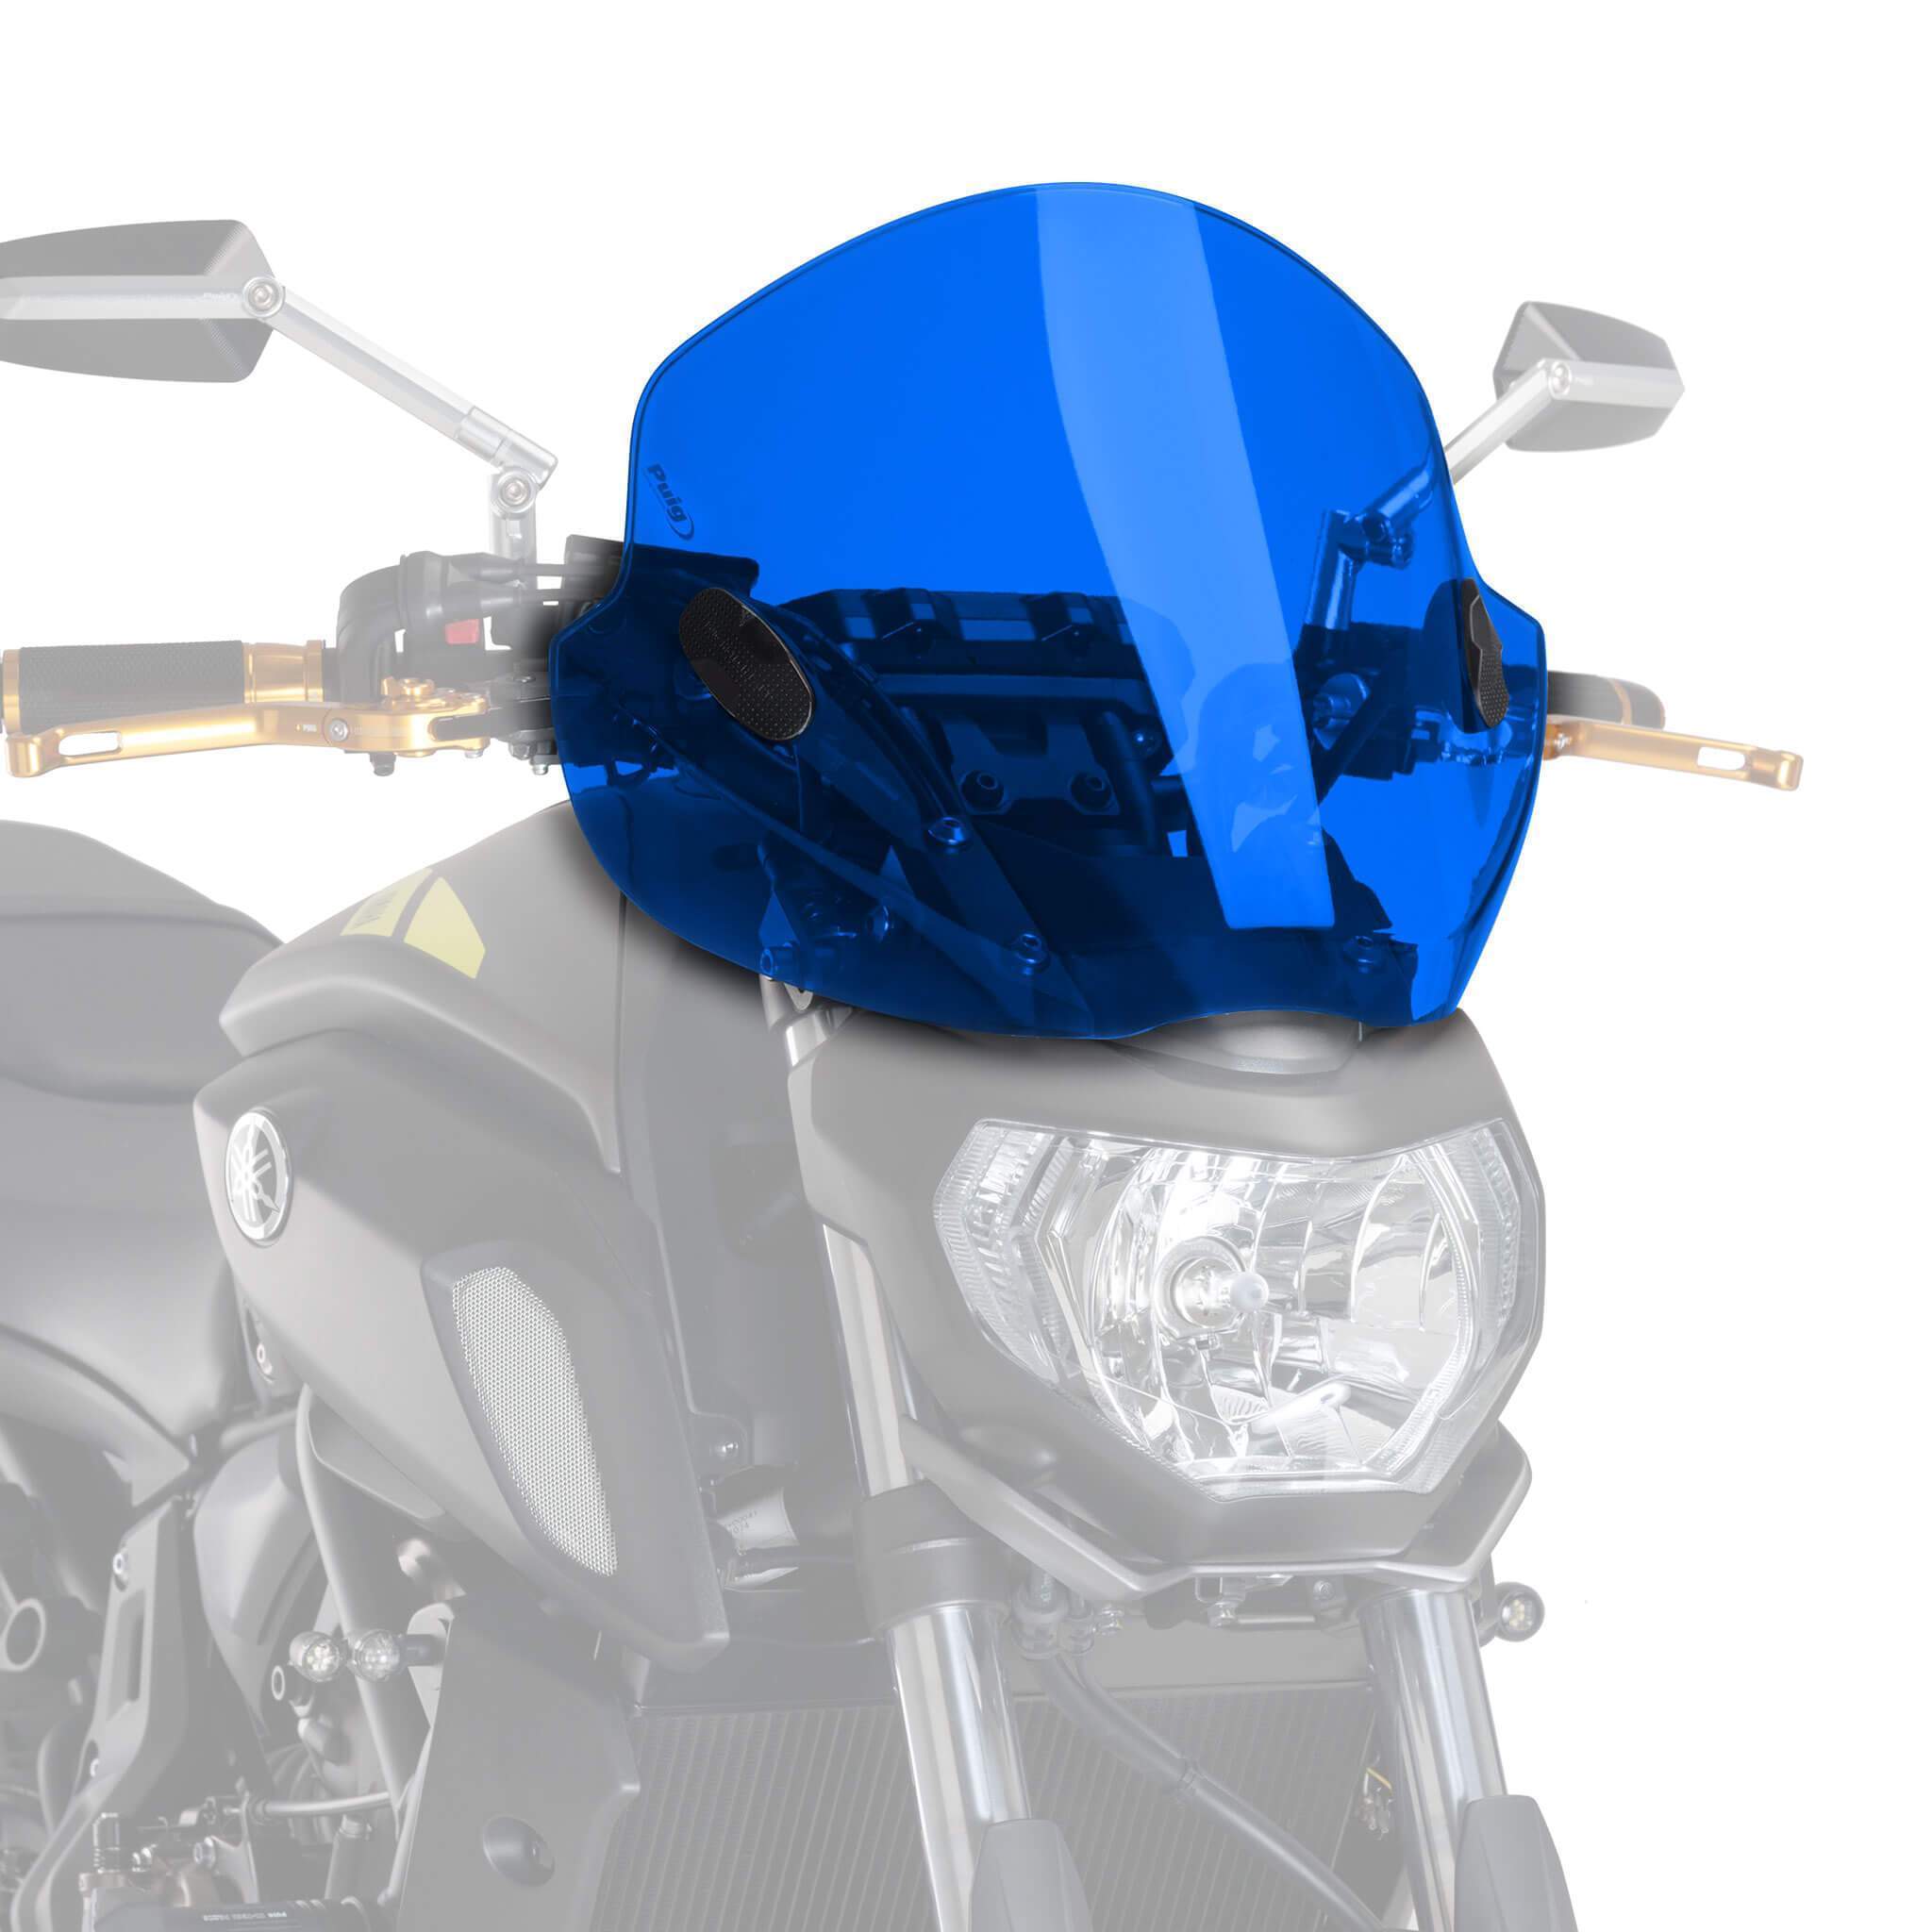 Puig Stream Screen | Blue | Kawasaki Z 750 2007>2012-M5022A-Screens-Pyramid Motorcycle Accessories